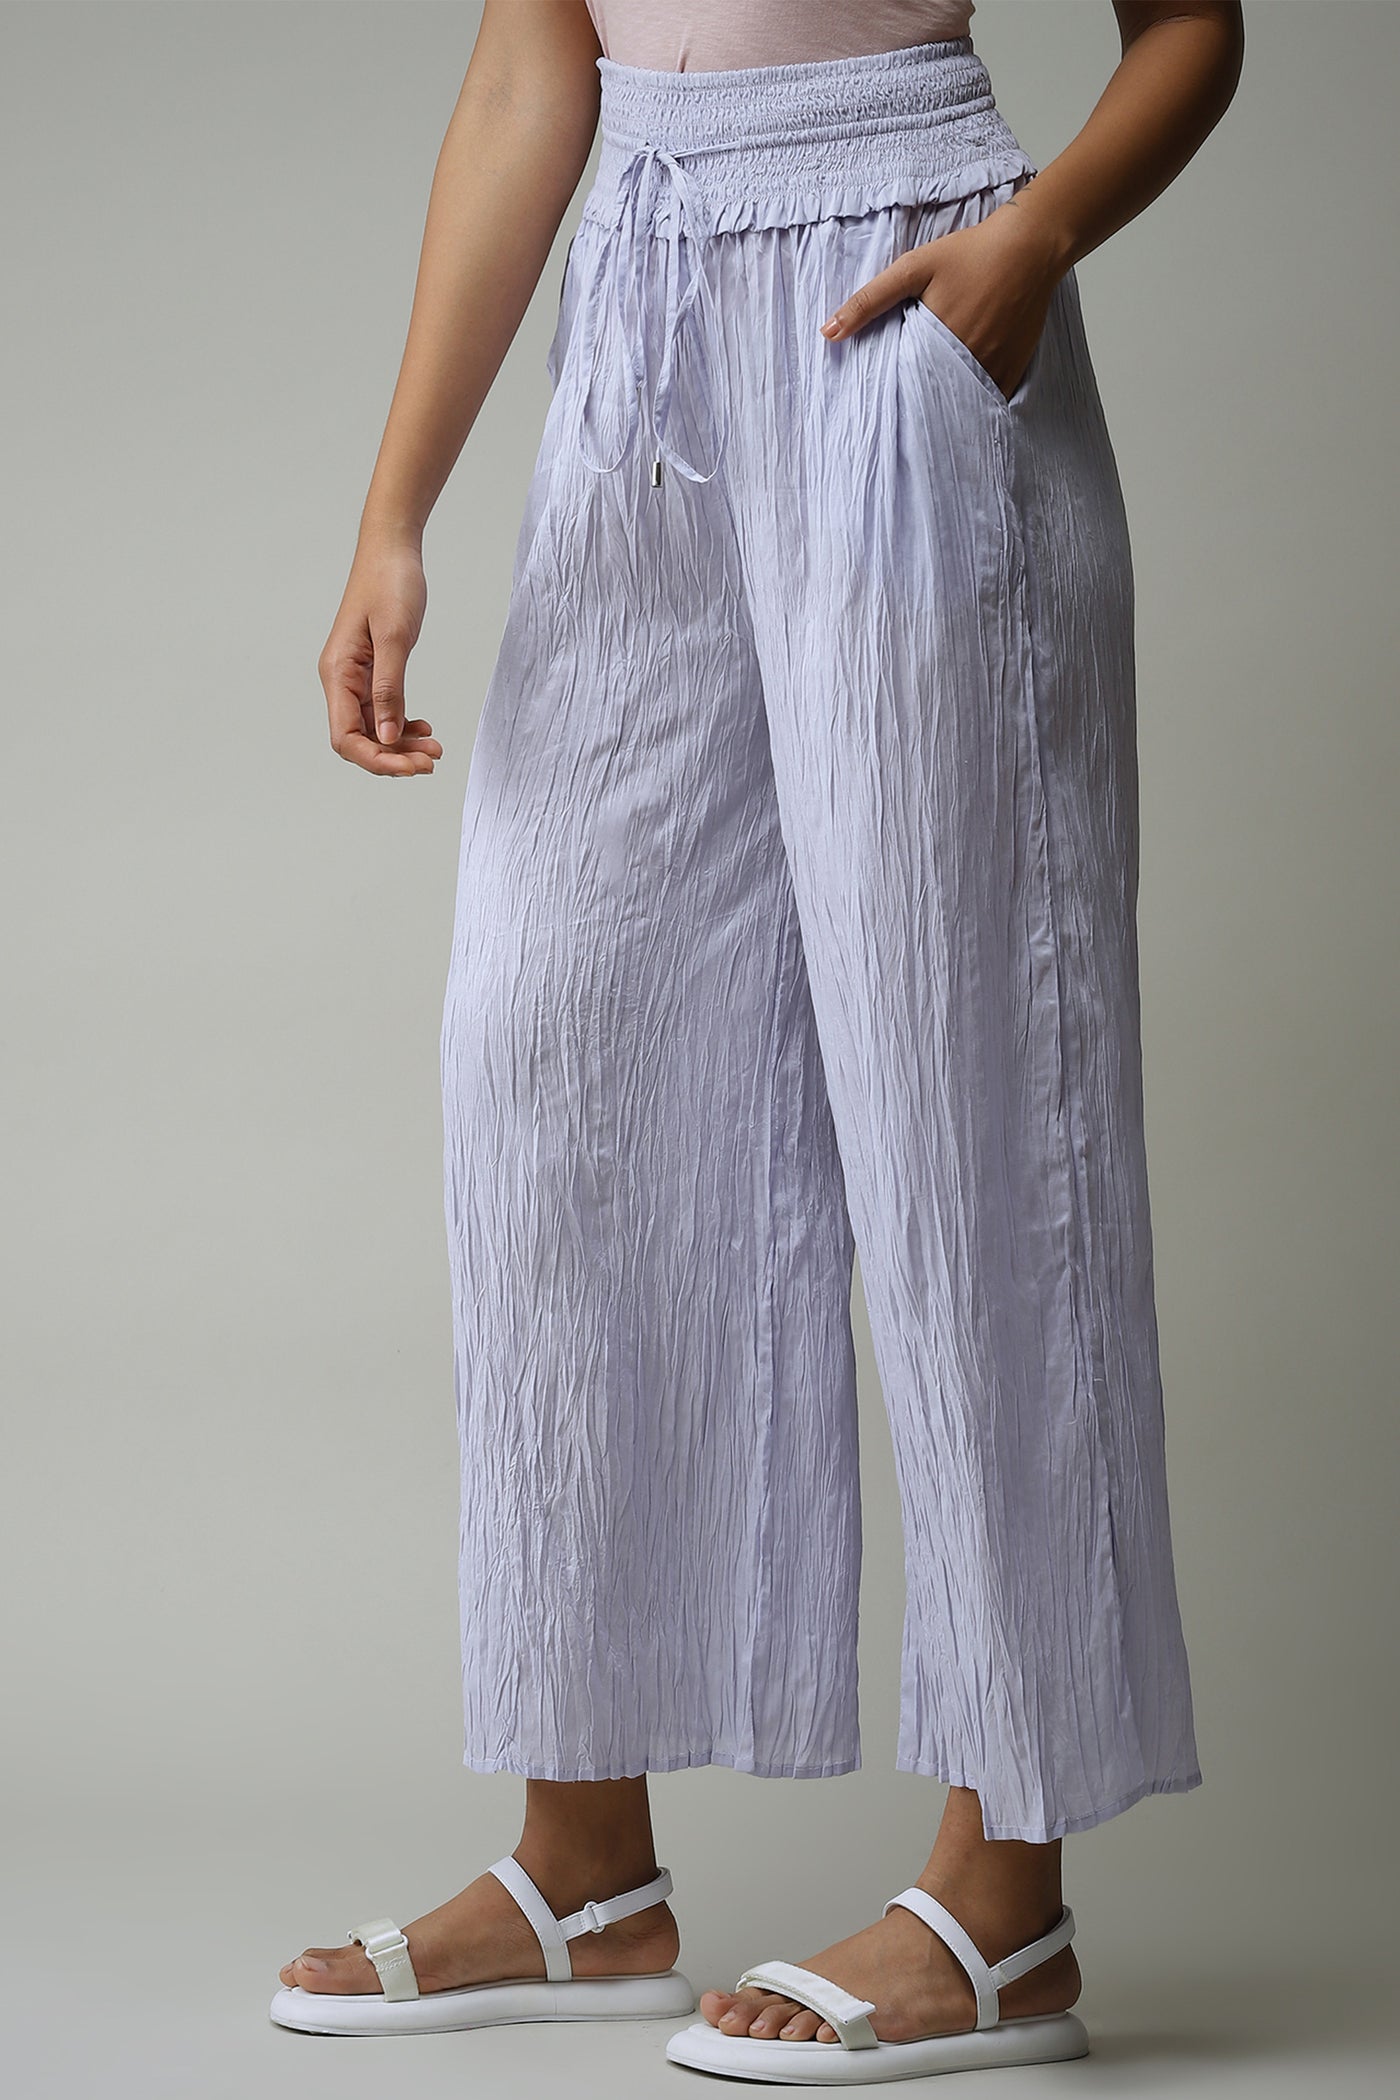 label ritu kumar Lavender Solid Wide Leg Pants western  designer wear online shopping melange singapore